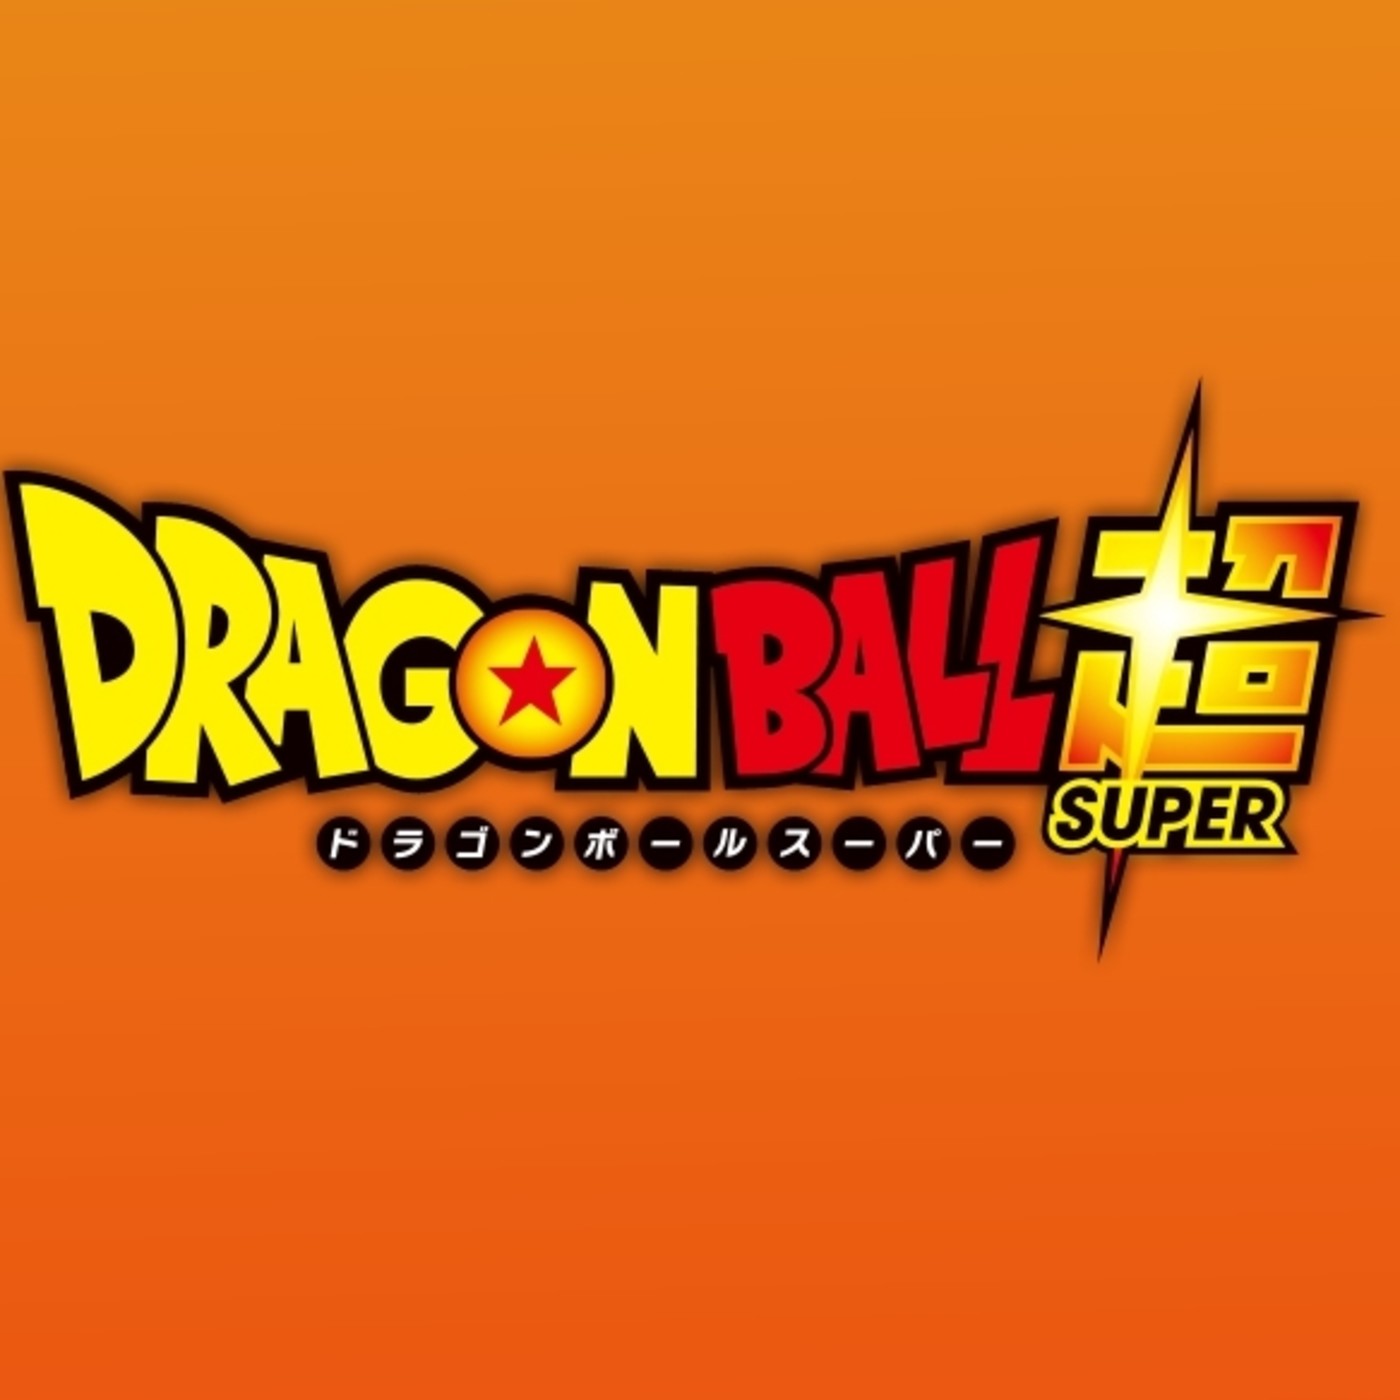 Gambatte Podcast | ’Dragon Ball Super’: Ep. 22, 23 y 24 en castellano